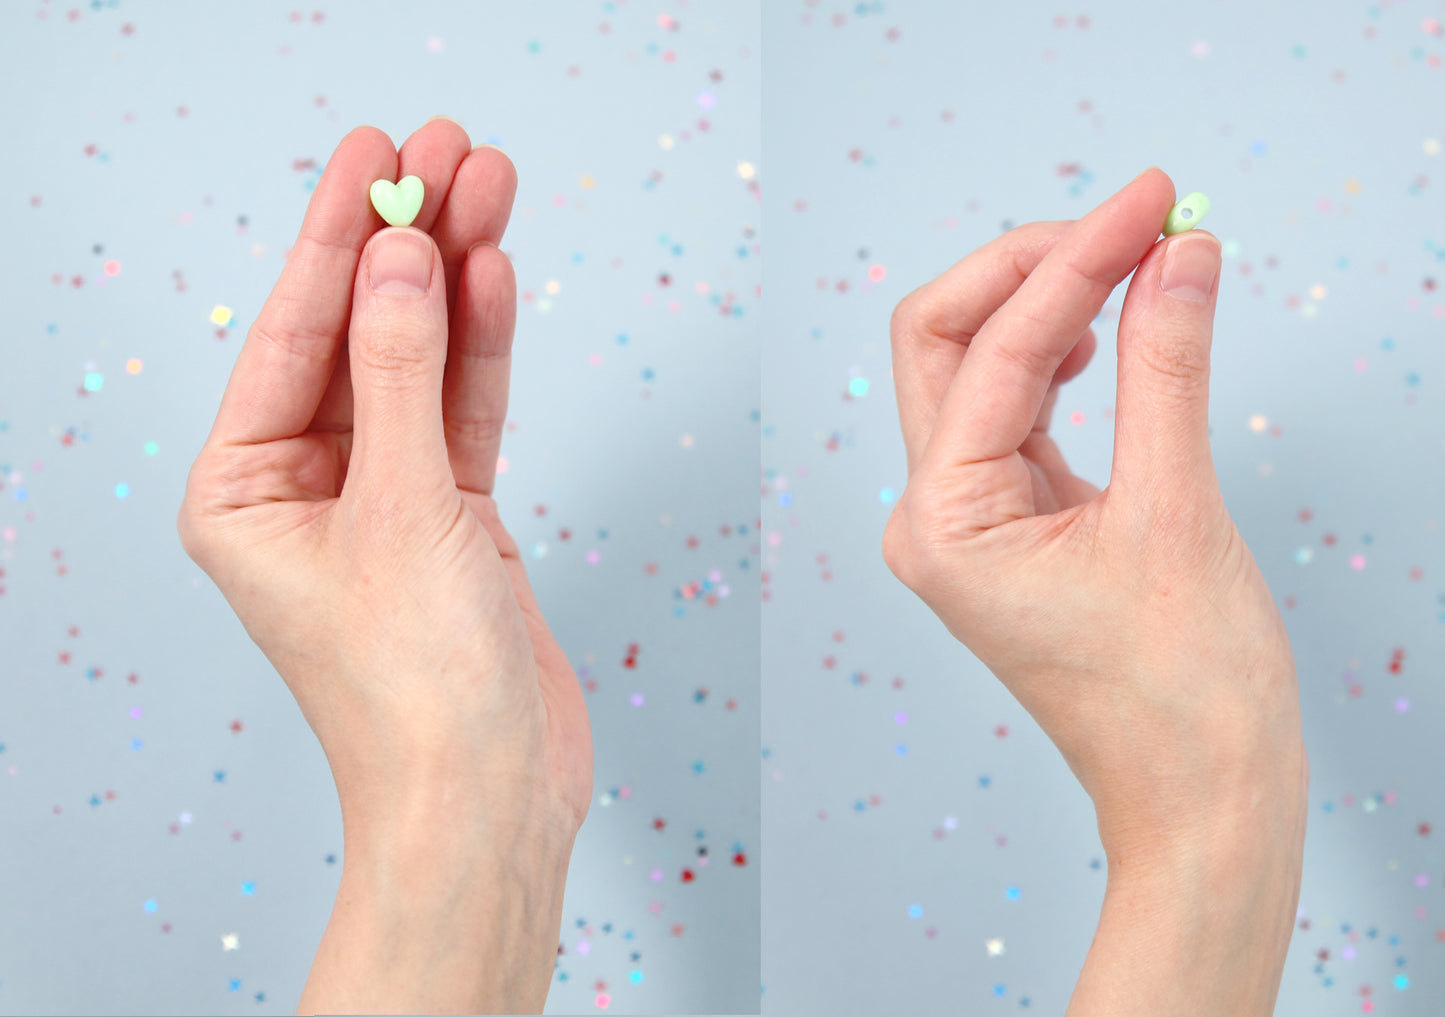 Plastic Heart Beads - 10mm Small Flat Beautiful Bright Plastic Pastel Heart Resin or Acrylic Beads - 200 pc set